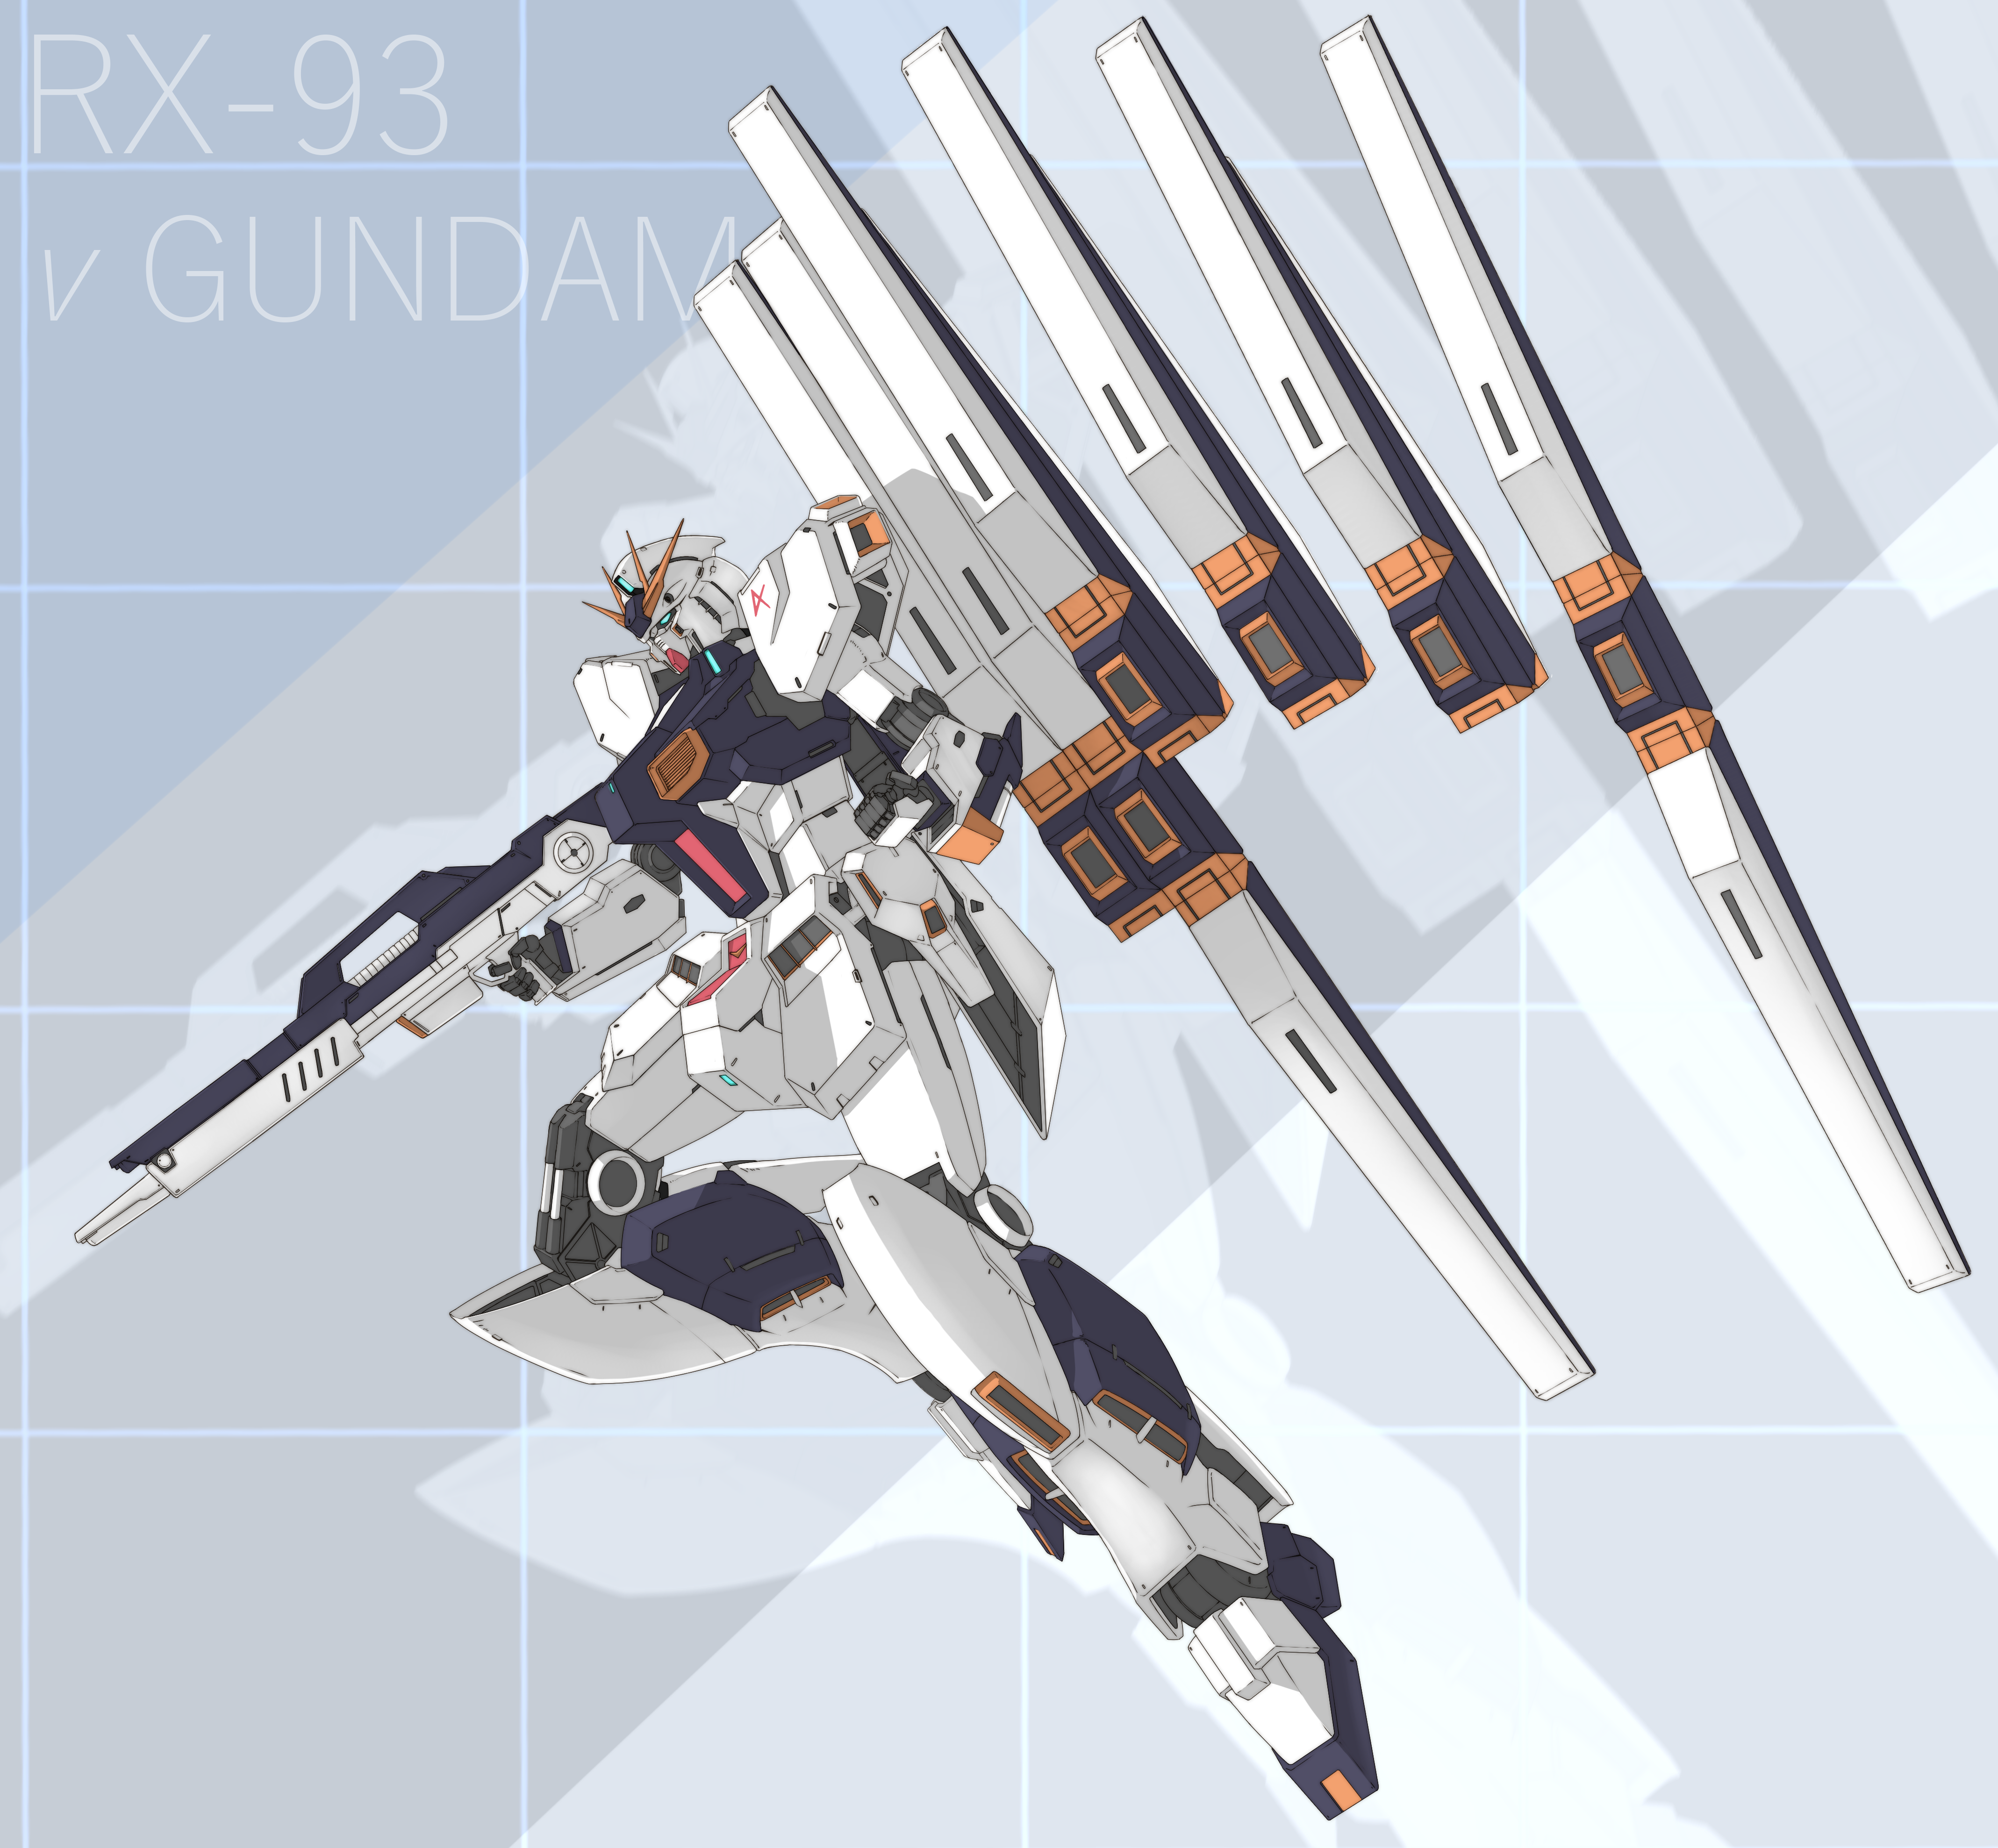 Anime 4275x3955 anime mechs Gundam Mobile Suit Gundam Char&#039;s Counterattack artwork digital art fan art Super Robot Taisen RX-93 v Gundam